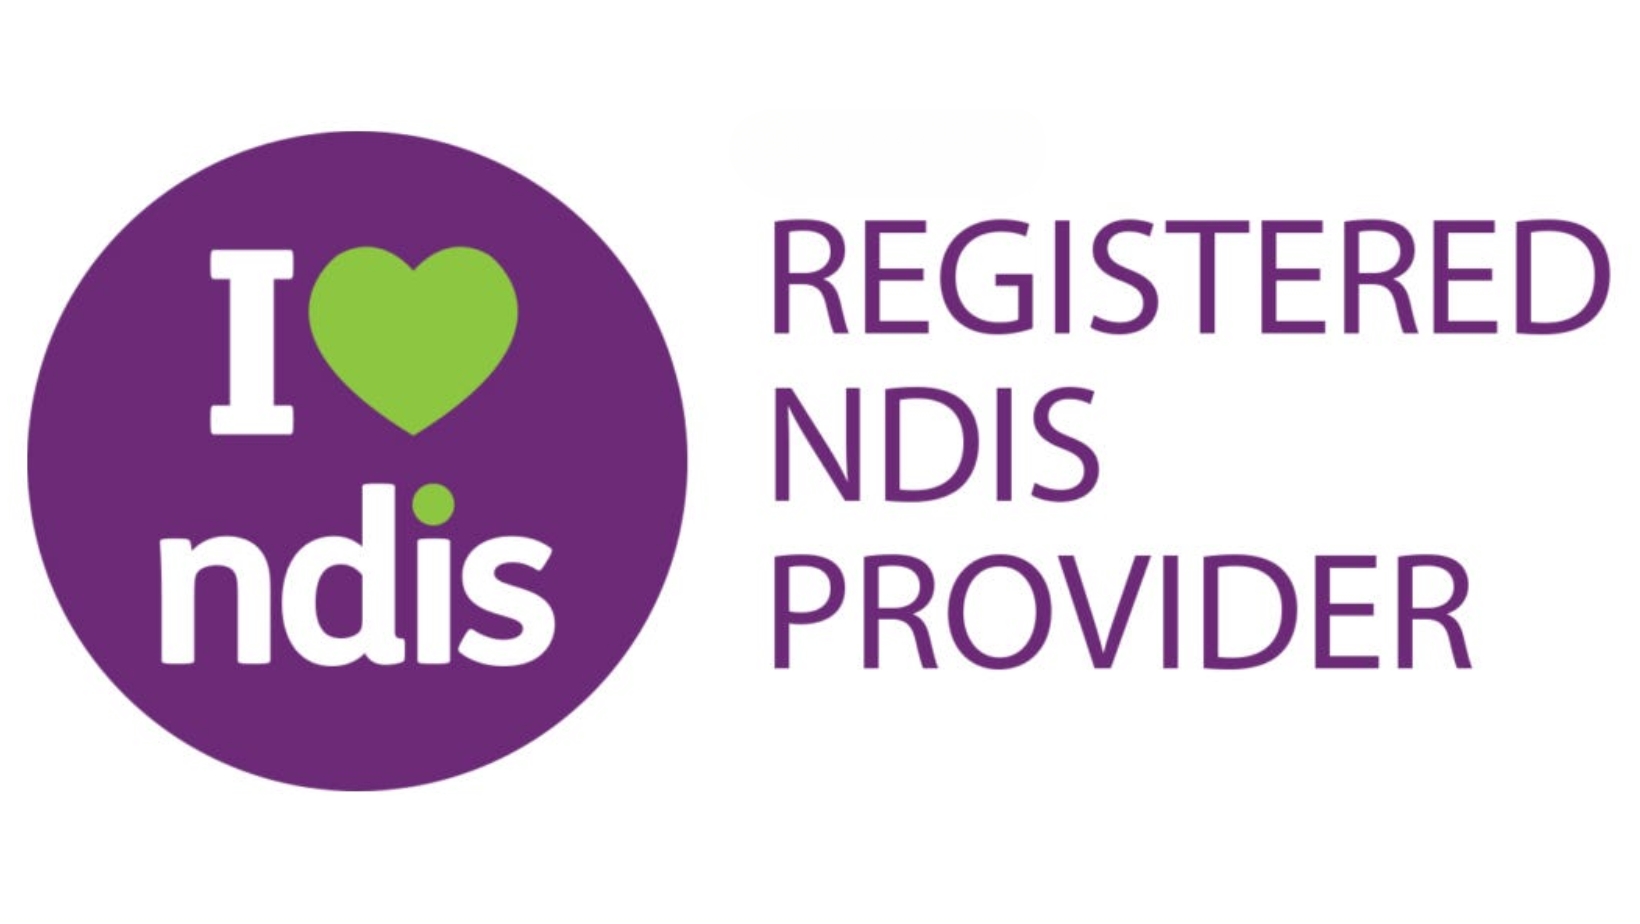 Registered NDIS provider near me